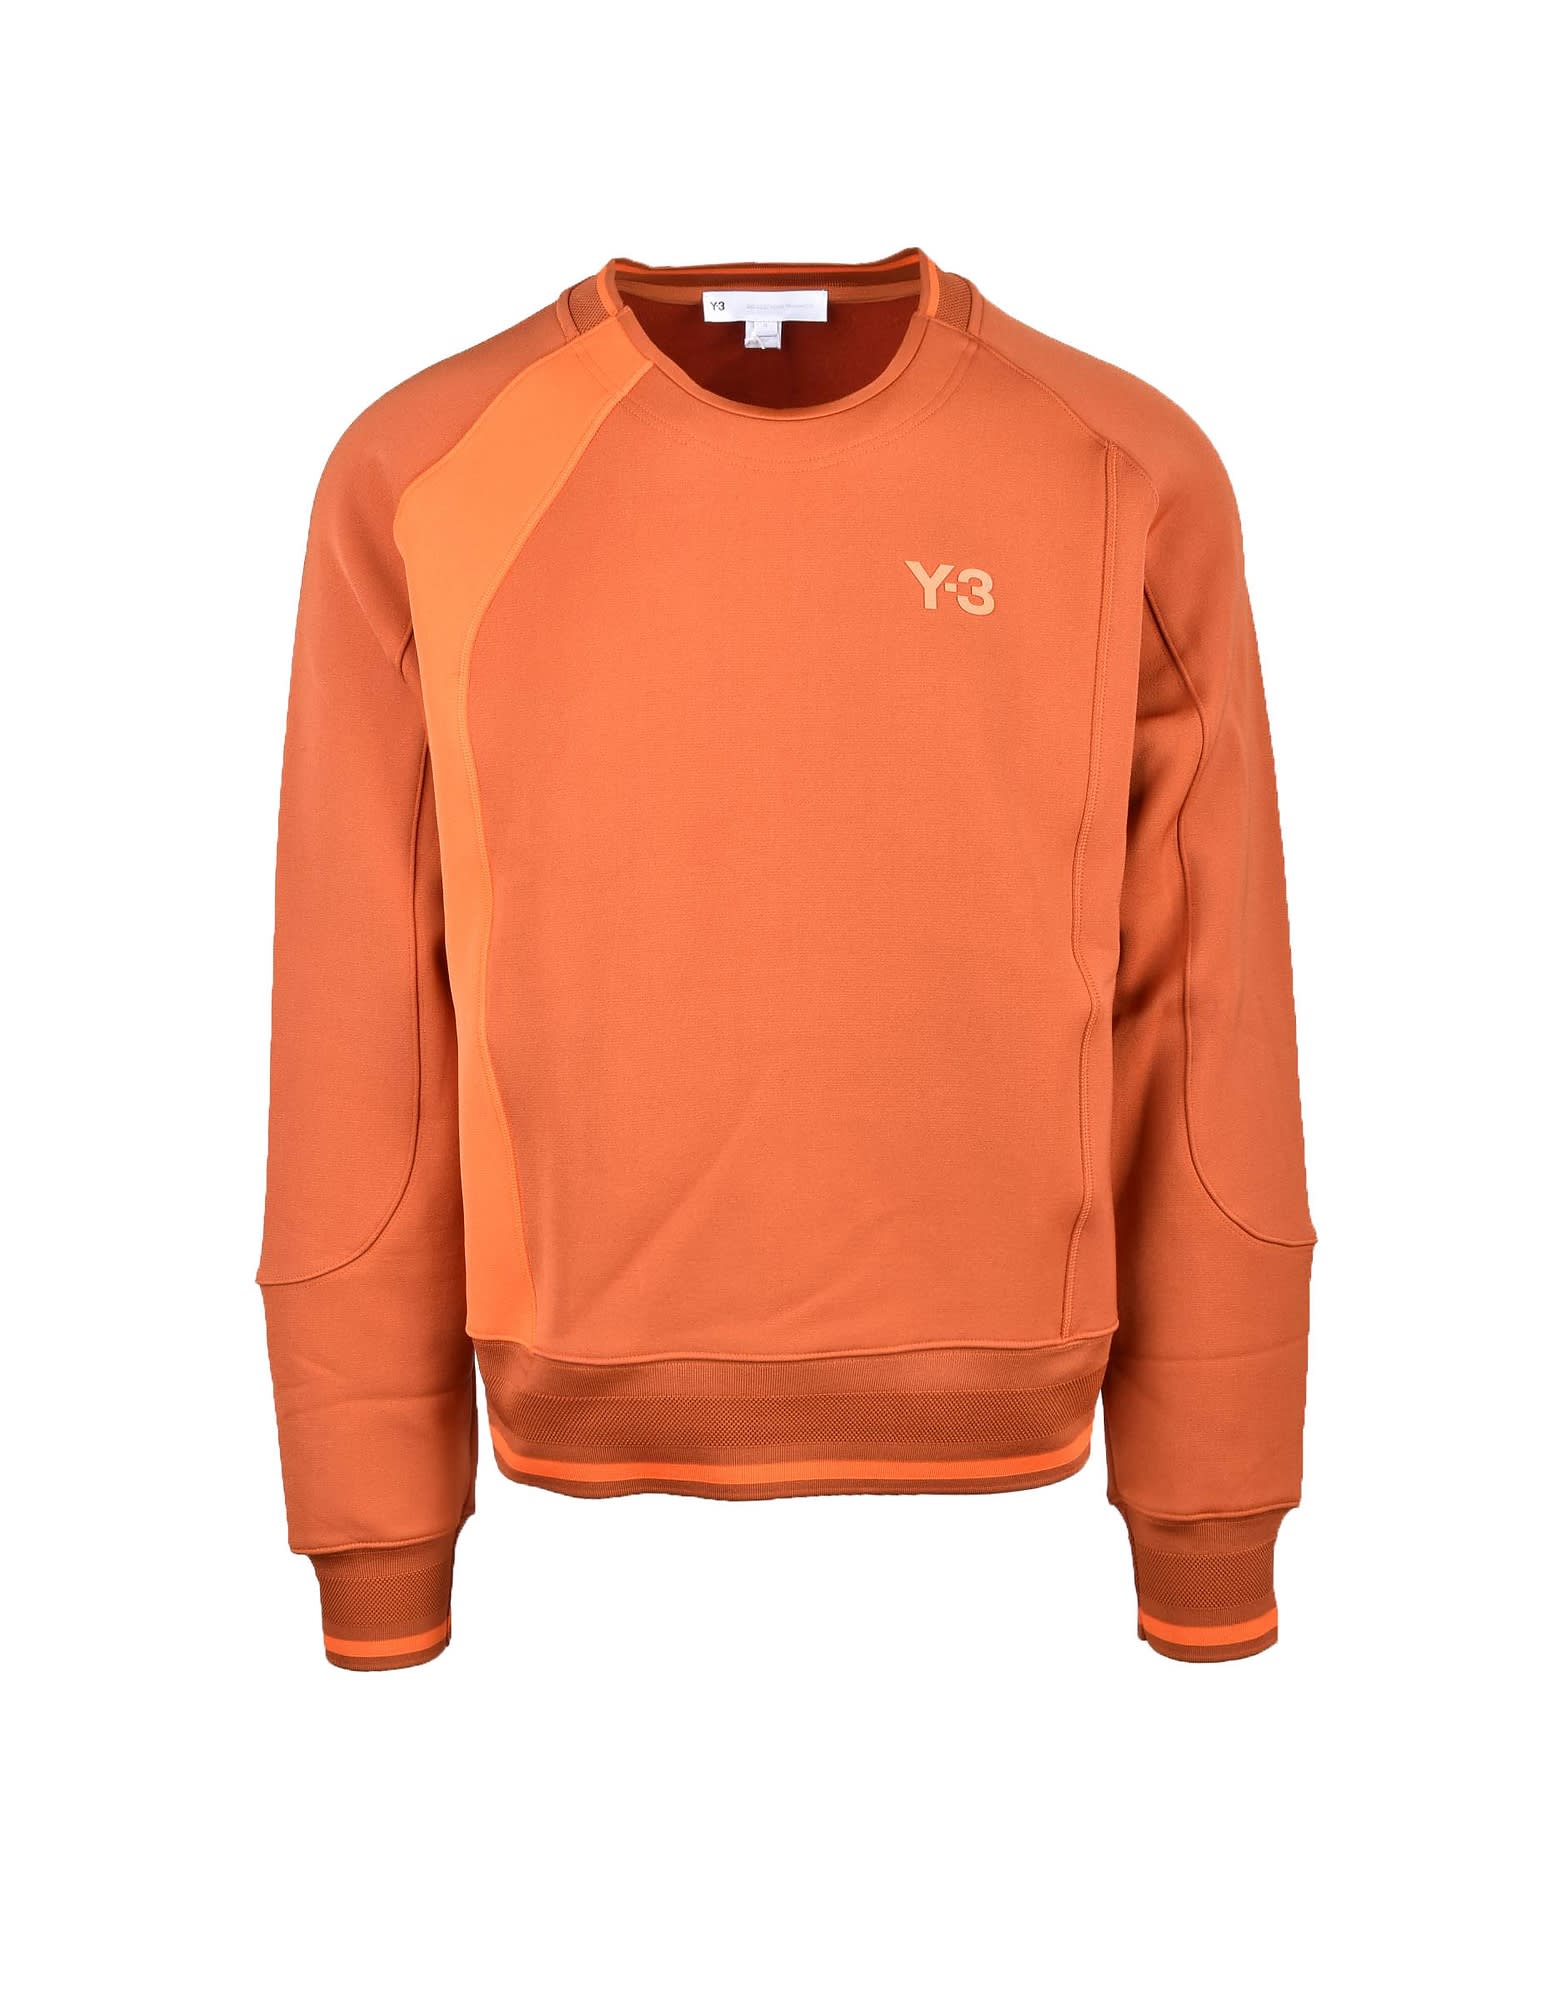 Mens Orange Sweatshirt